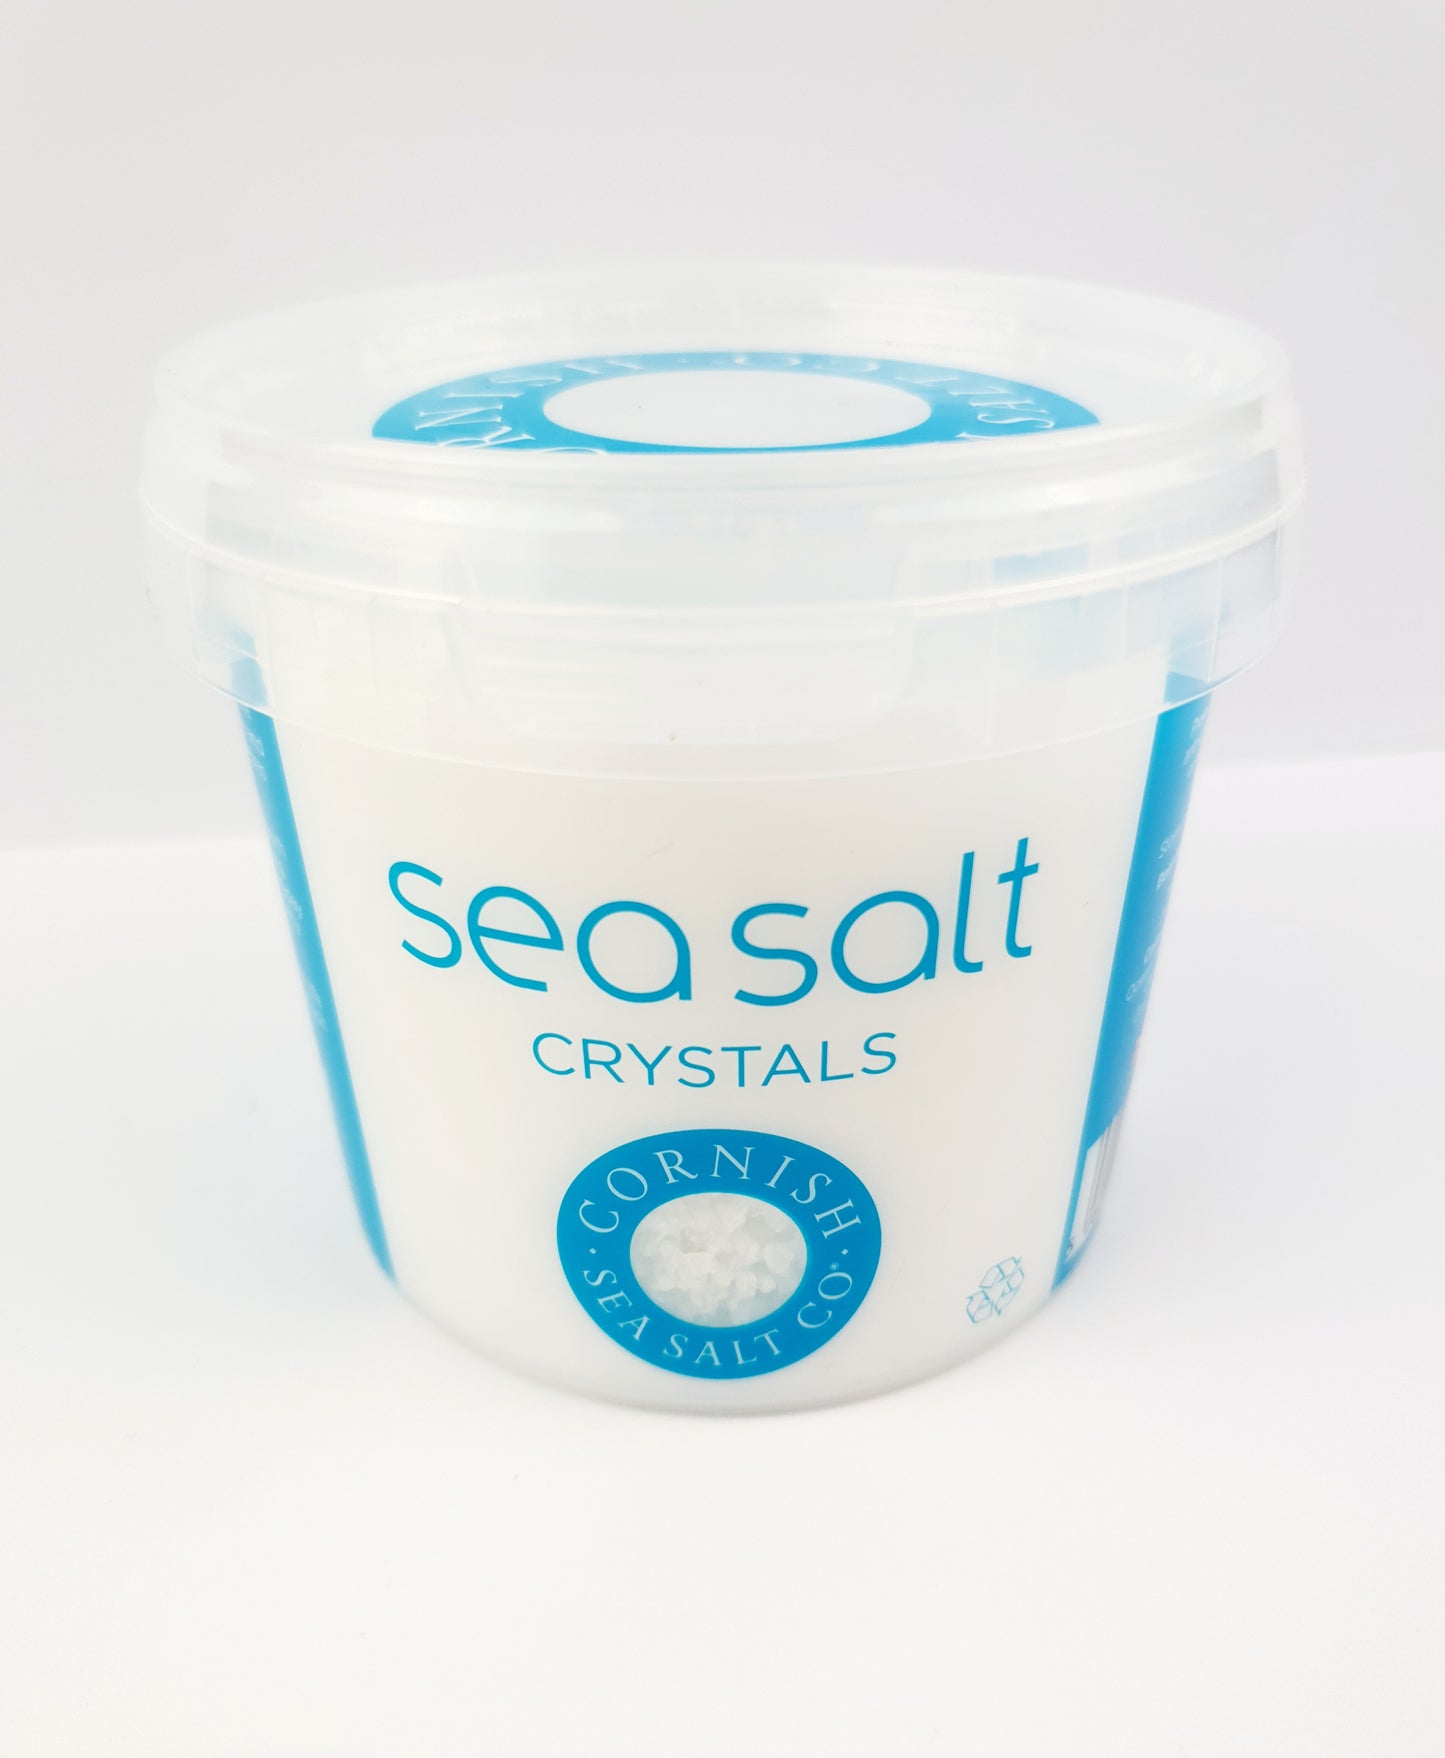 Cornish Seasalt Original Crystals 225g